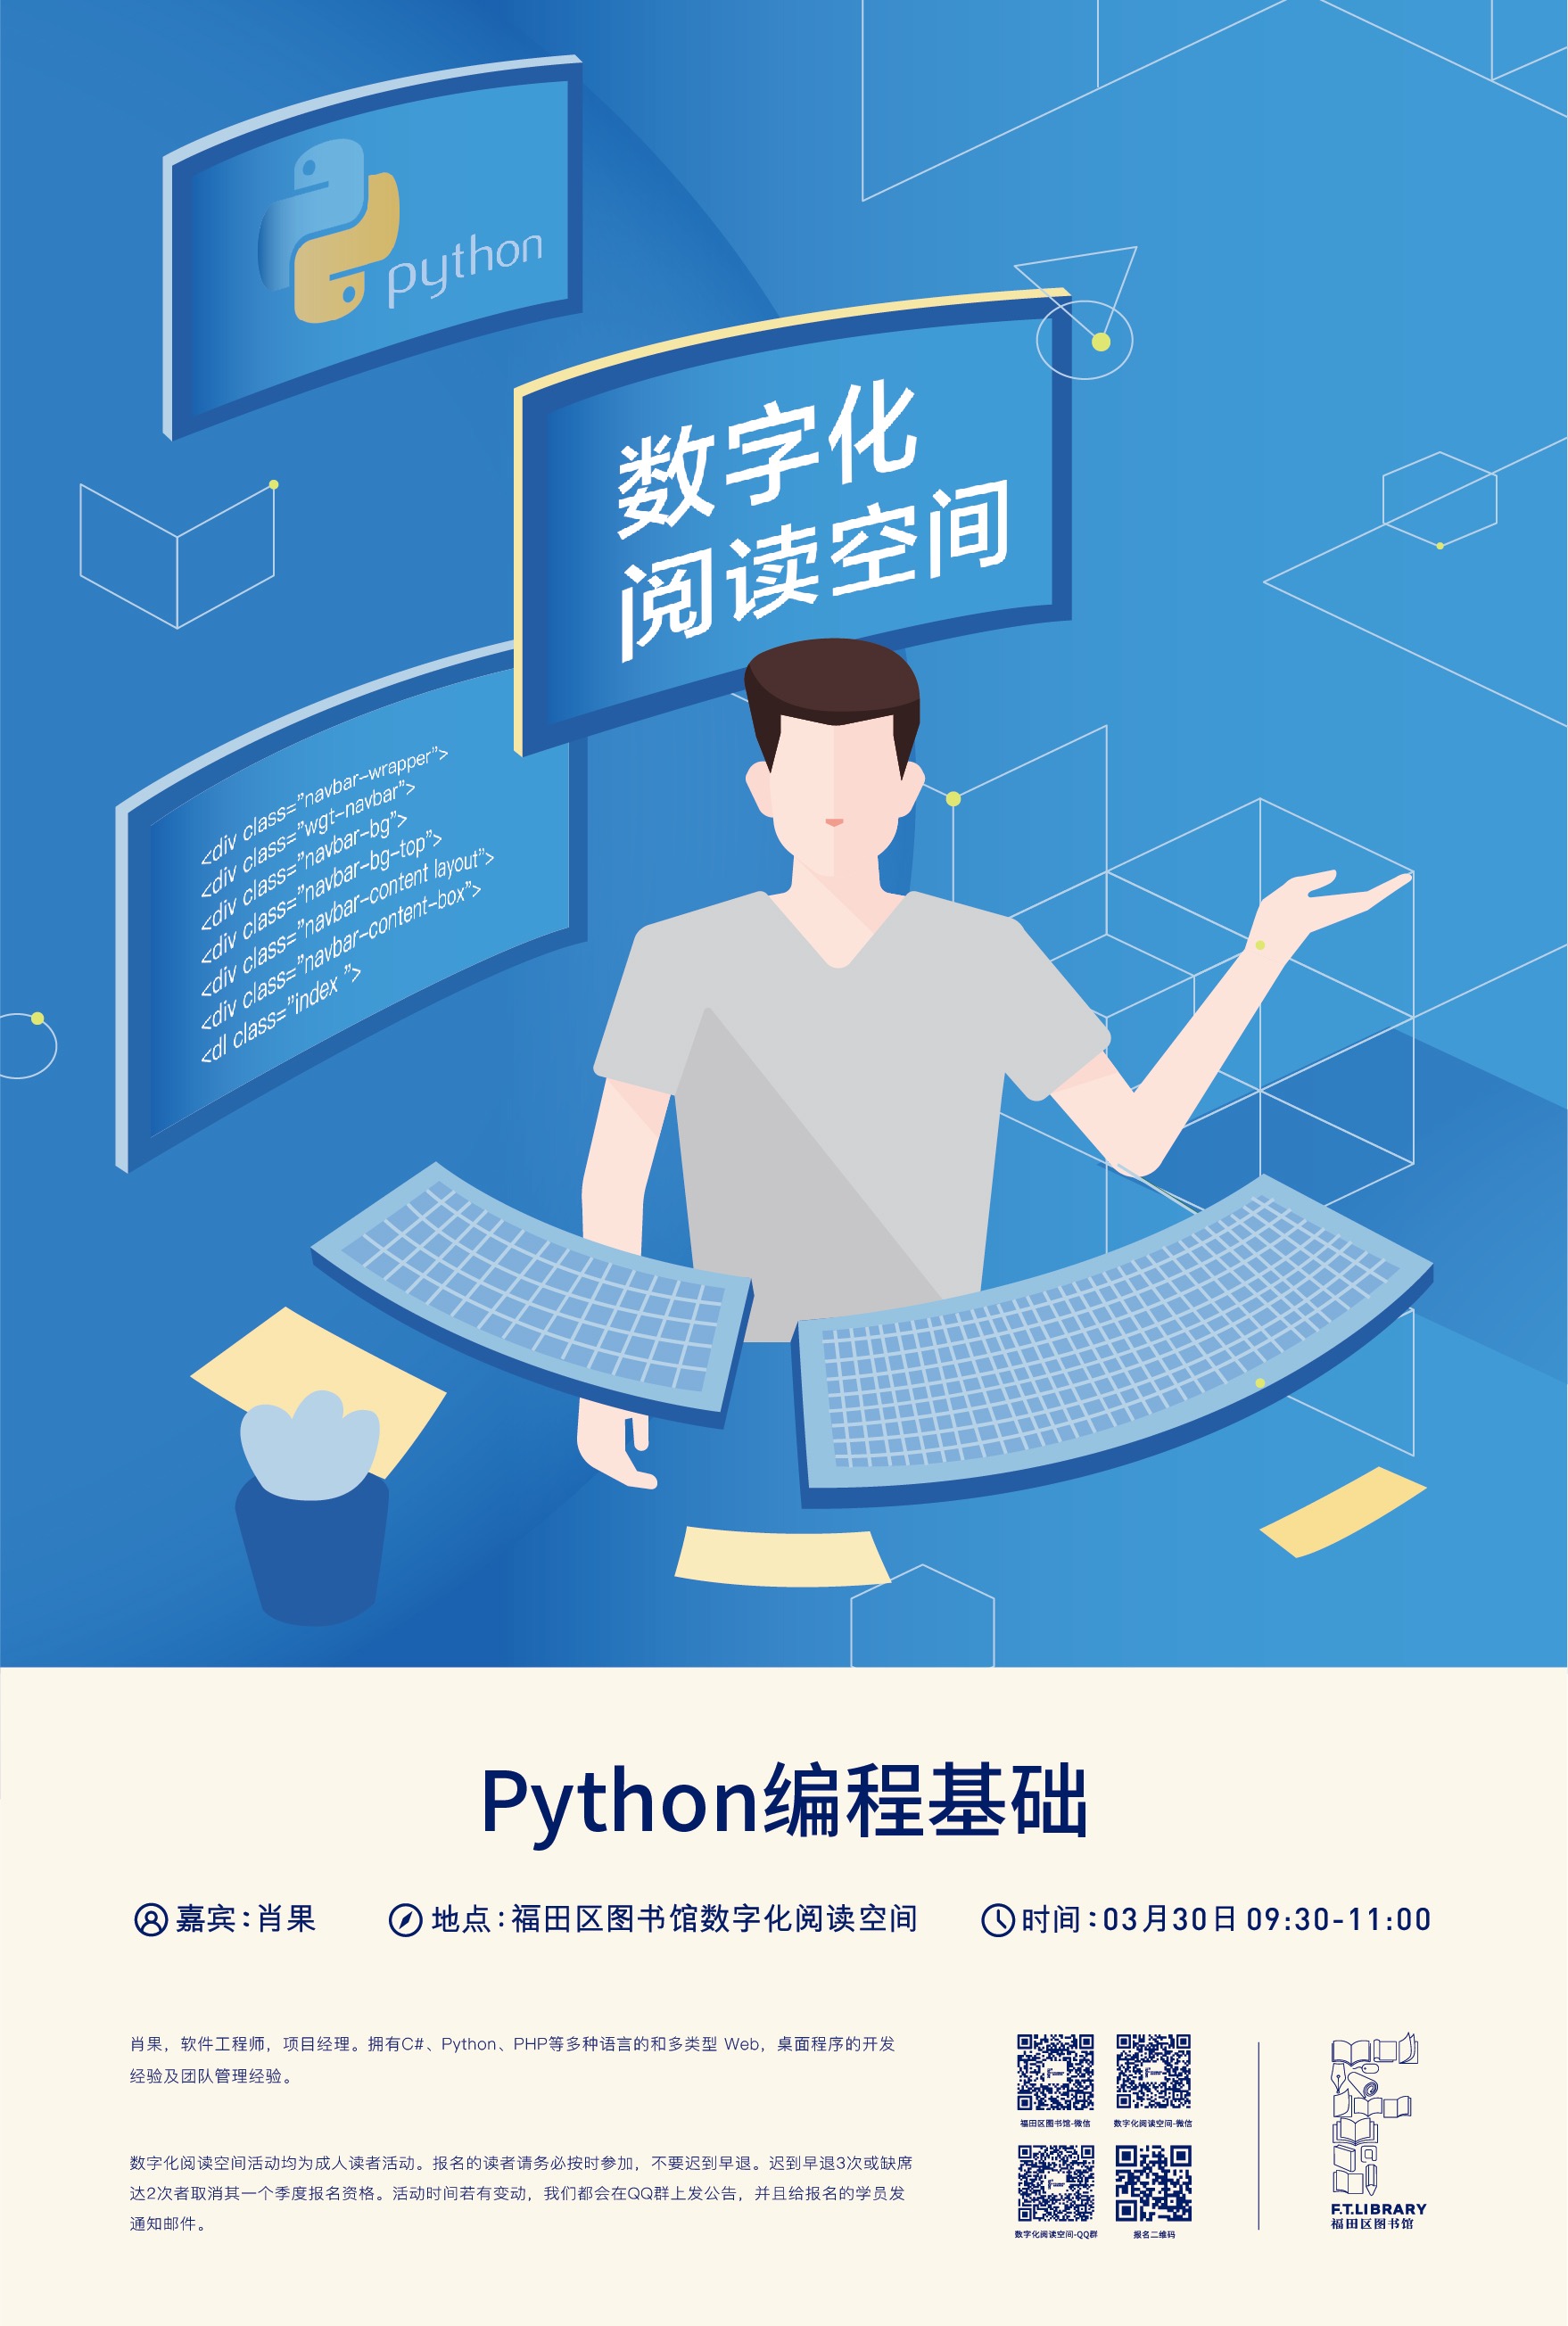 python怎么进入编程界面 - python扩展库